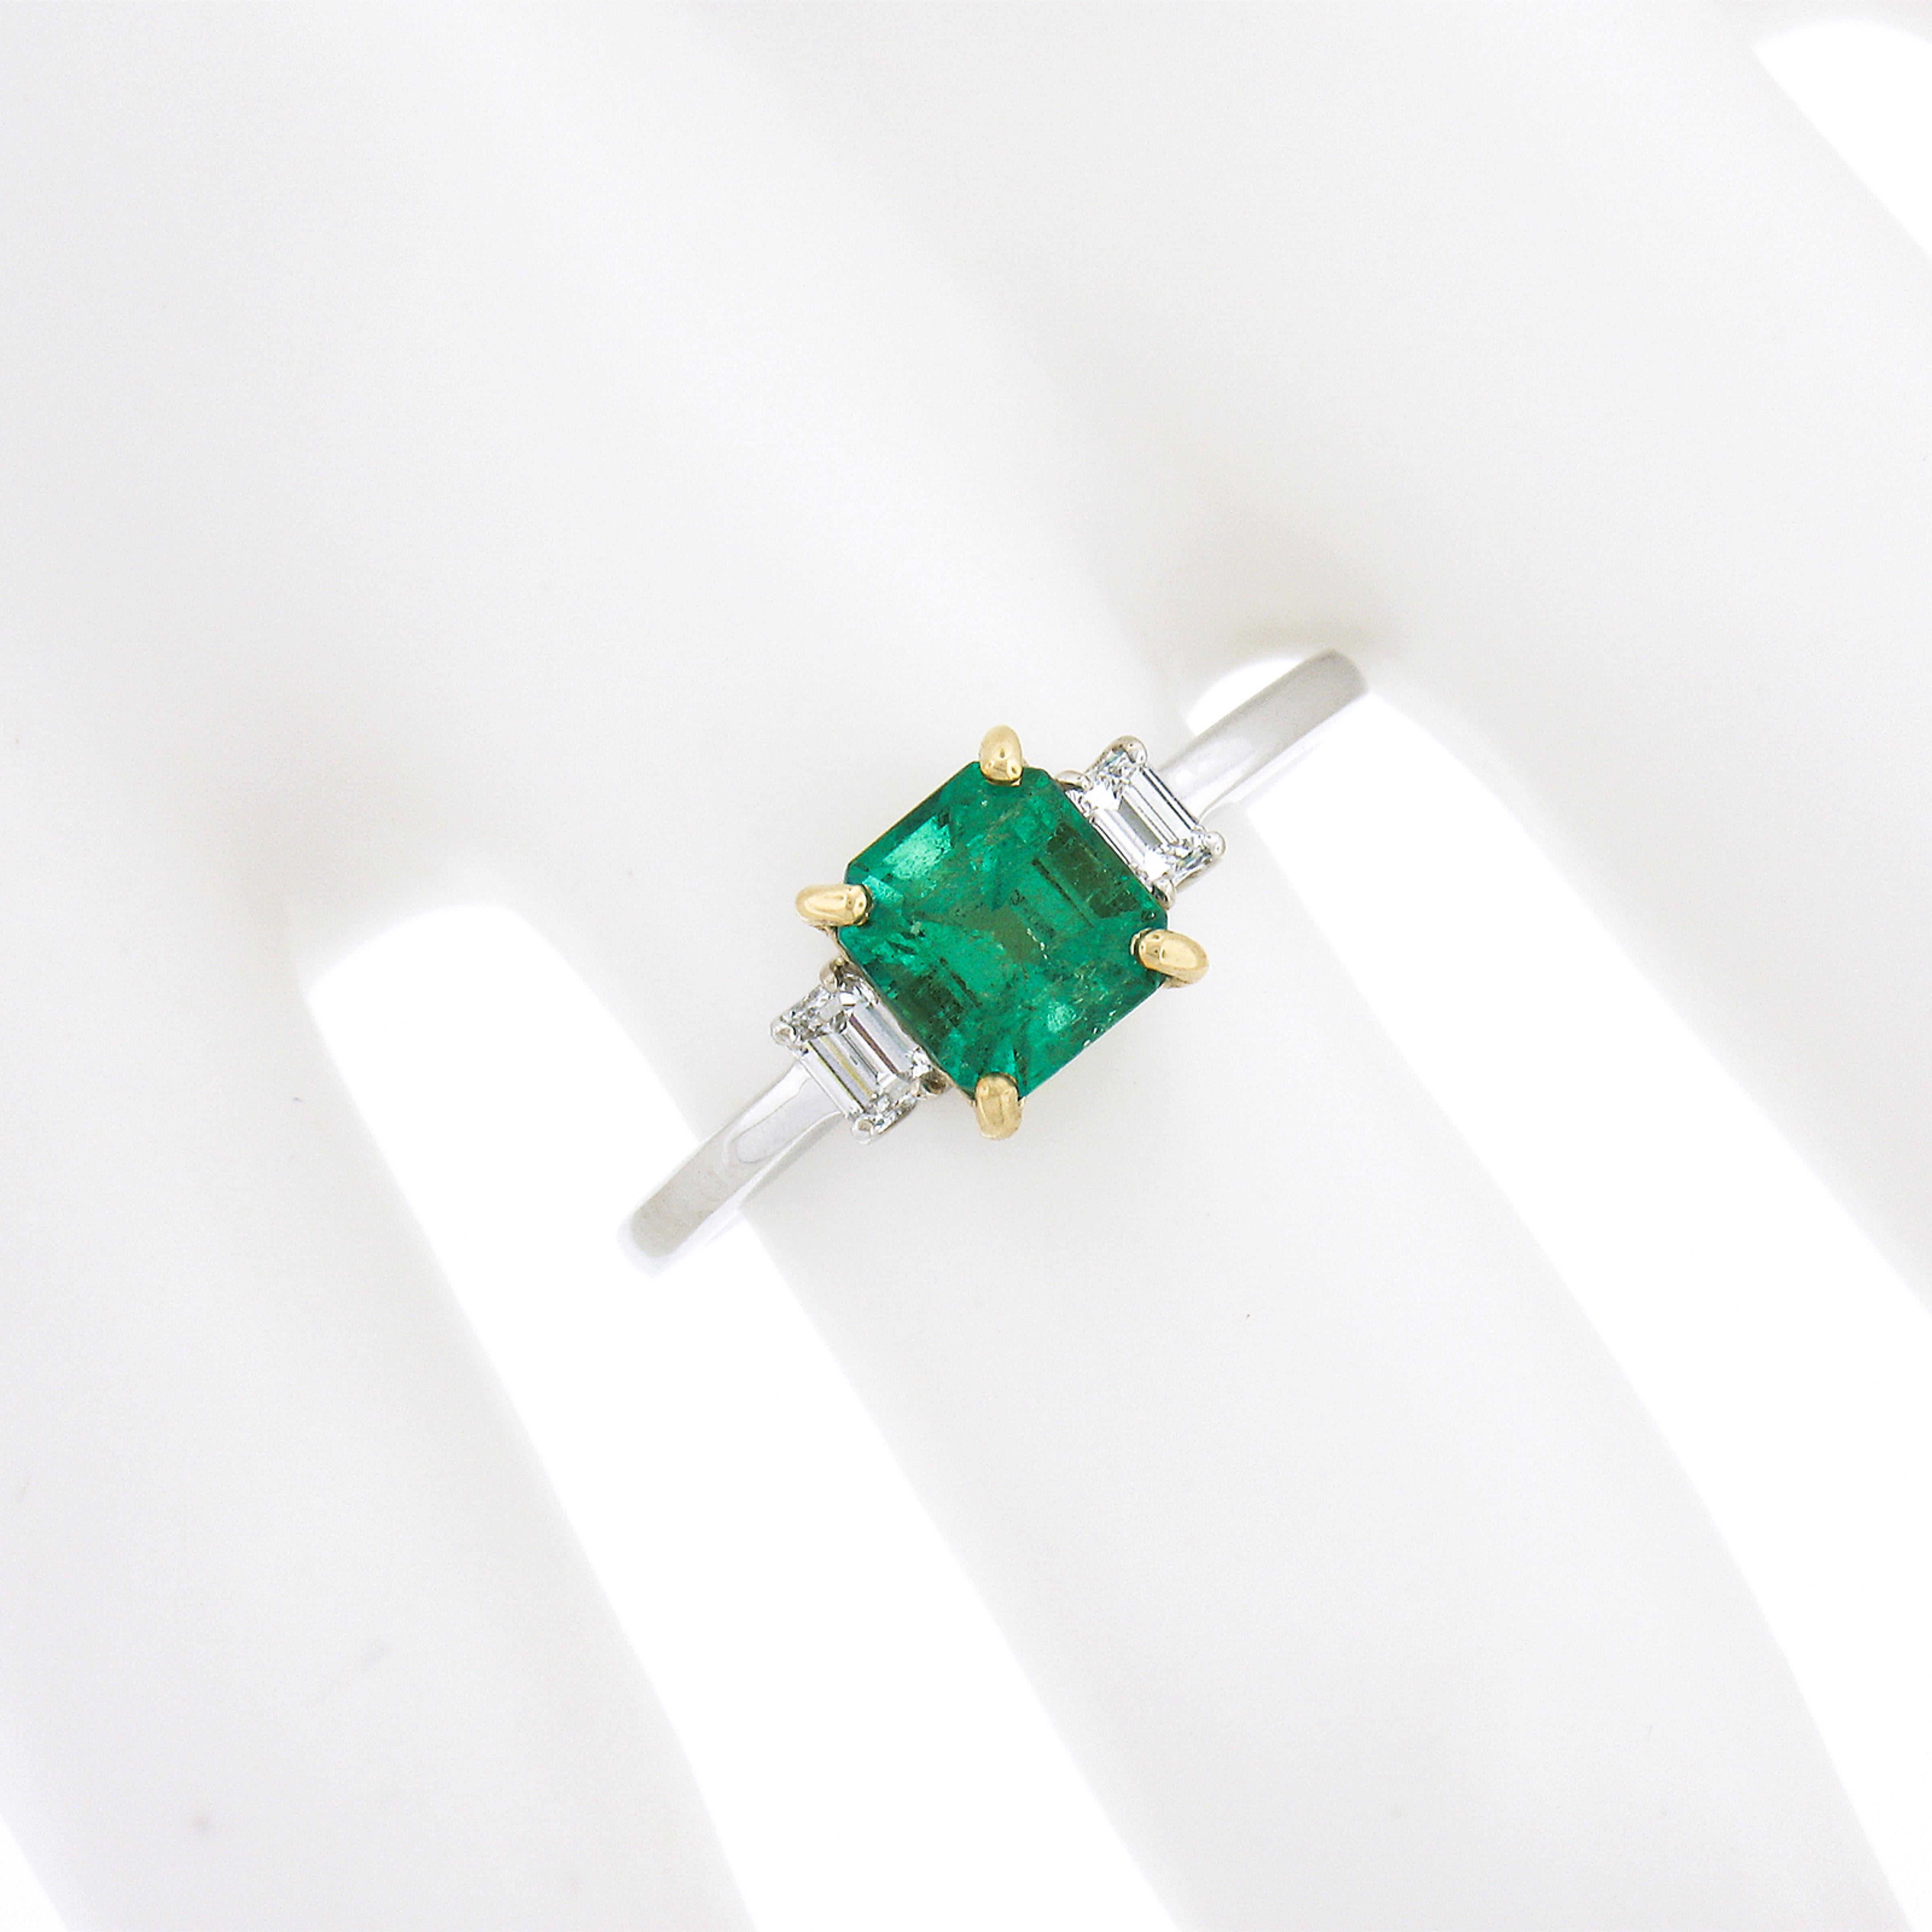 NEW 18k TT Gold 1.05ctw Emerald Cut Columbian Emerald w/ Diamond Accents Ring For Sale 1